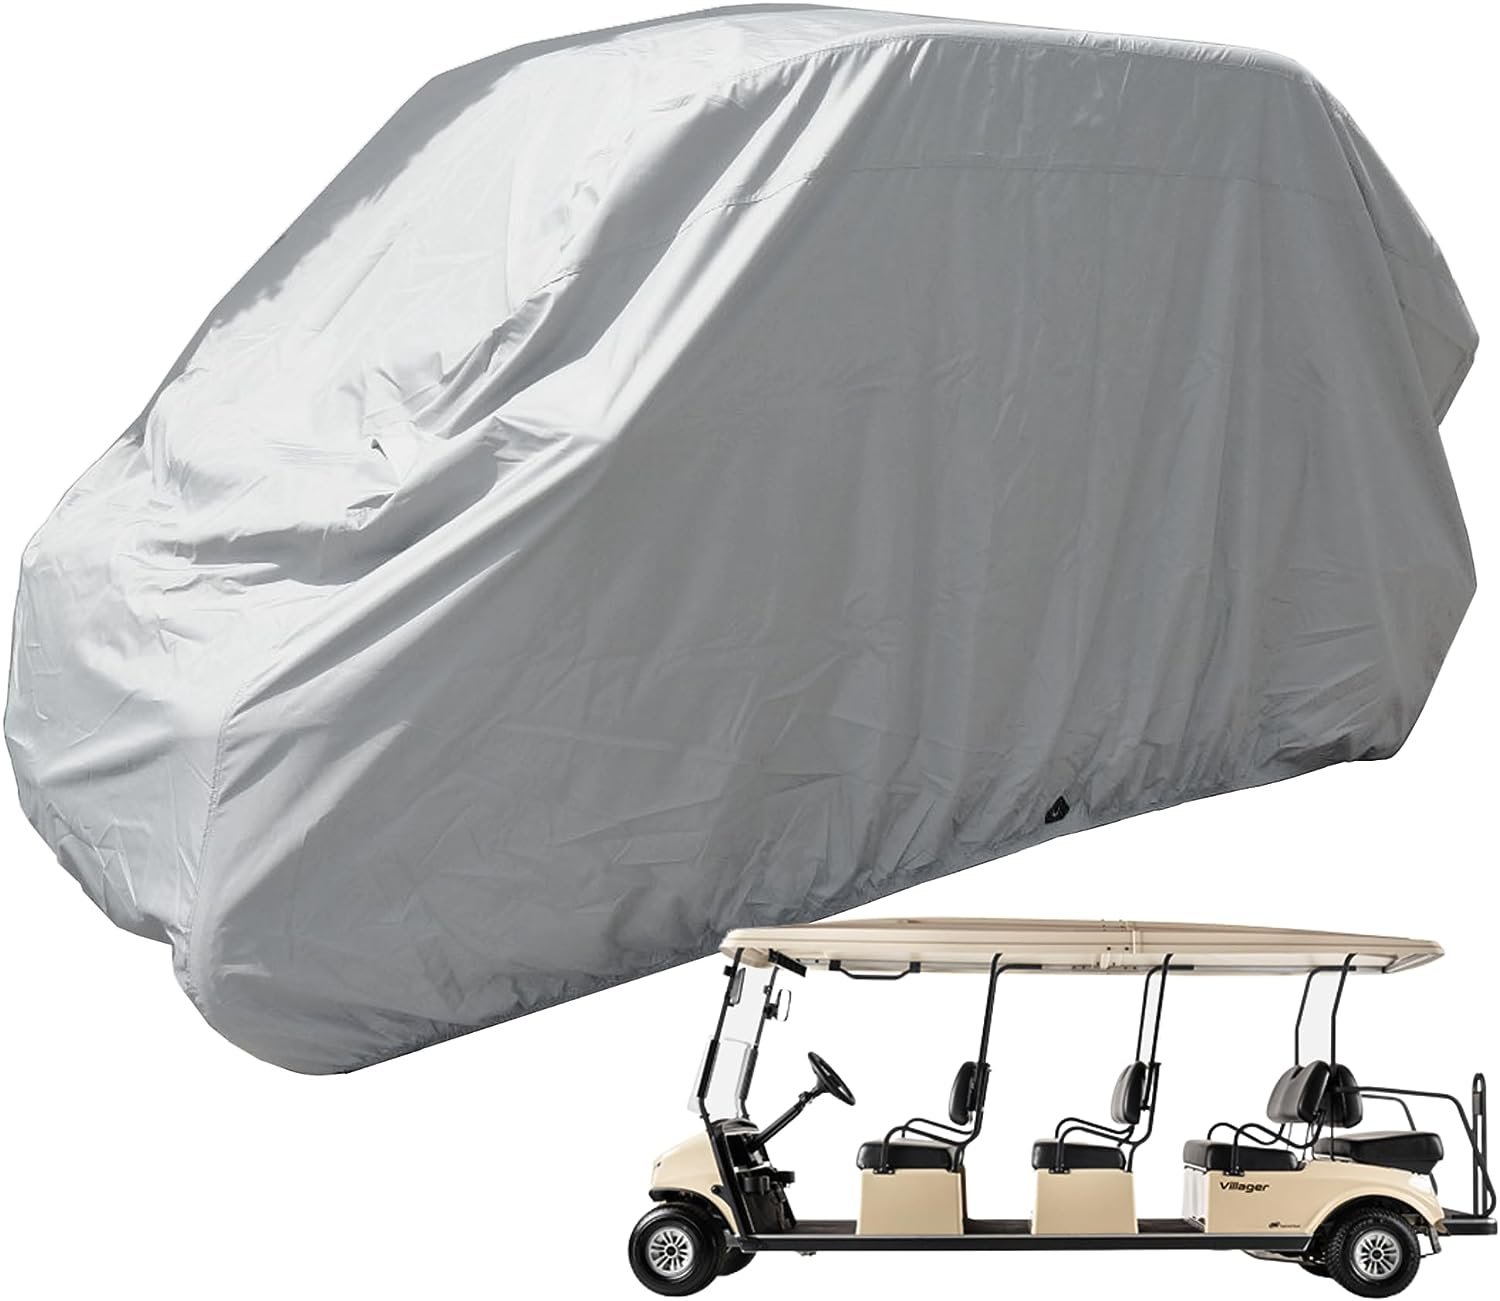 Golf Cart 8 Seater Storage Cover (Grey or Taupe), Fits EZGO, Club car, Yamaha Model, Chrysler/Polaris GEM e6